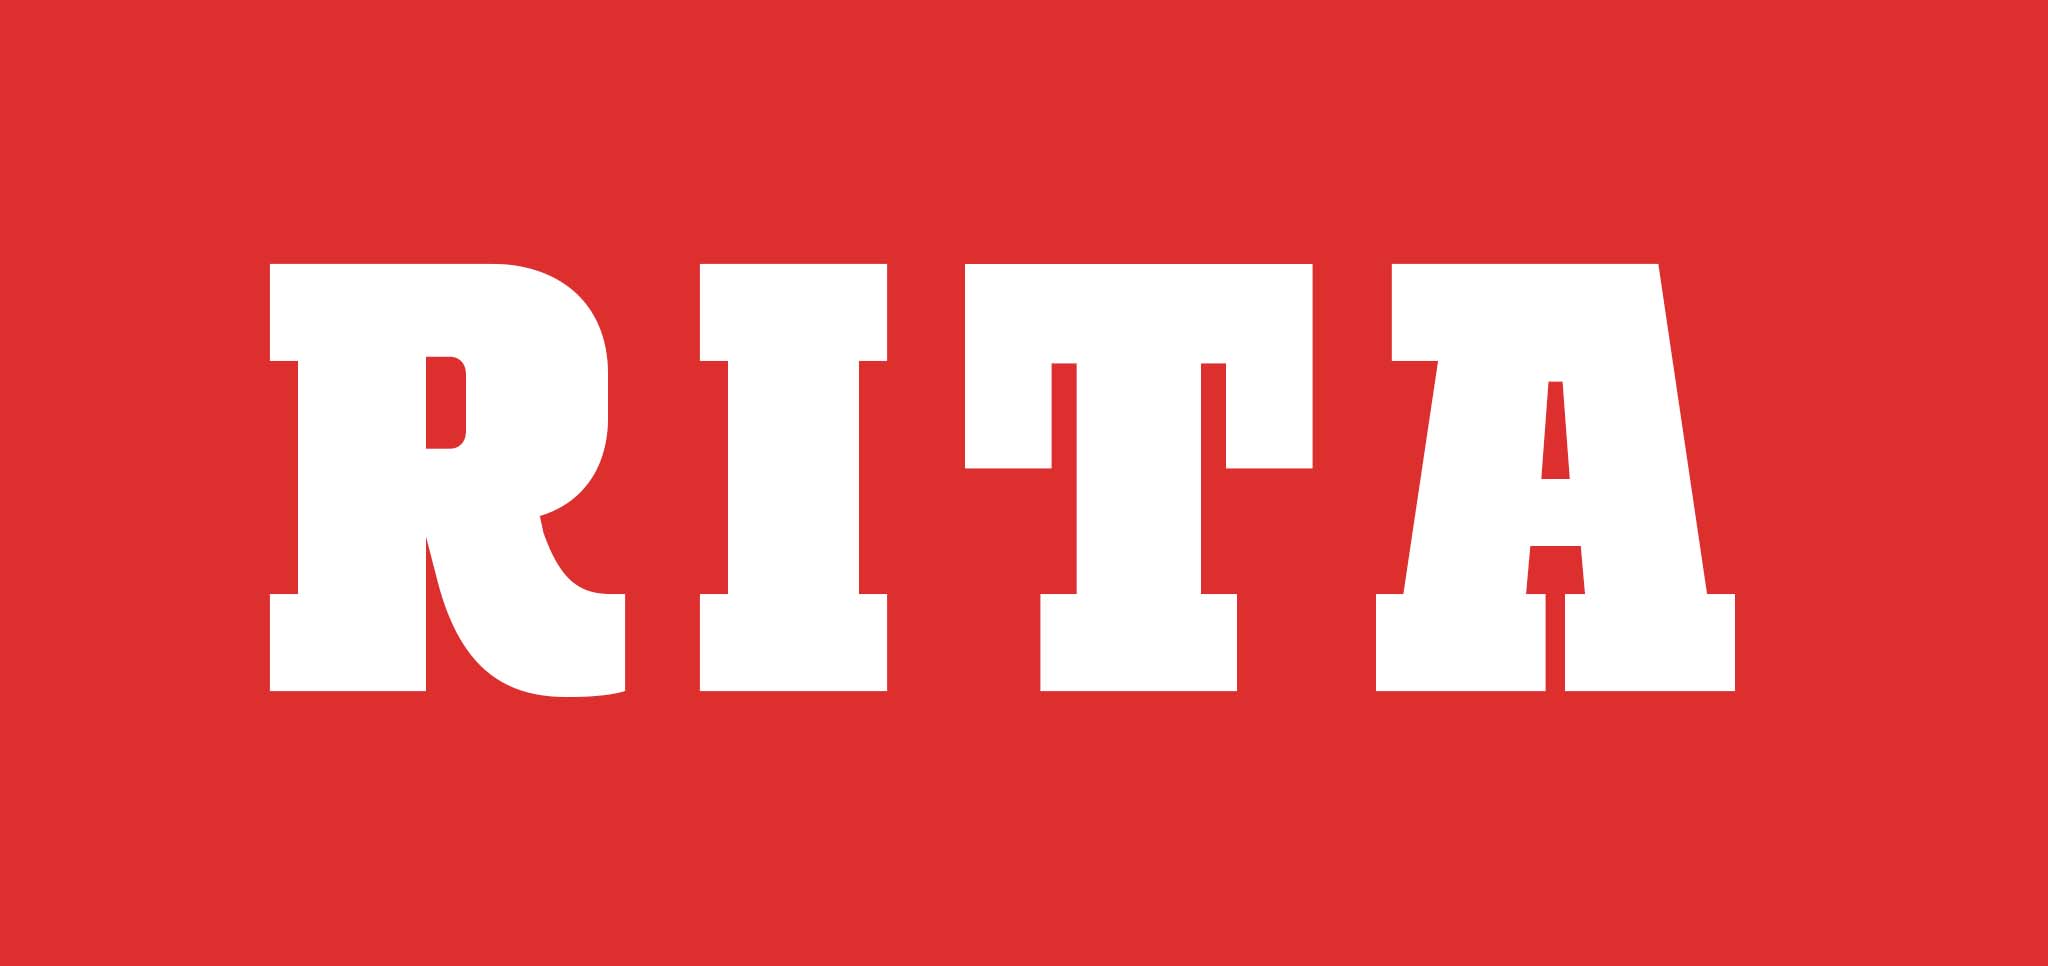 21 gratis stoere lettertypes - Rita